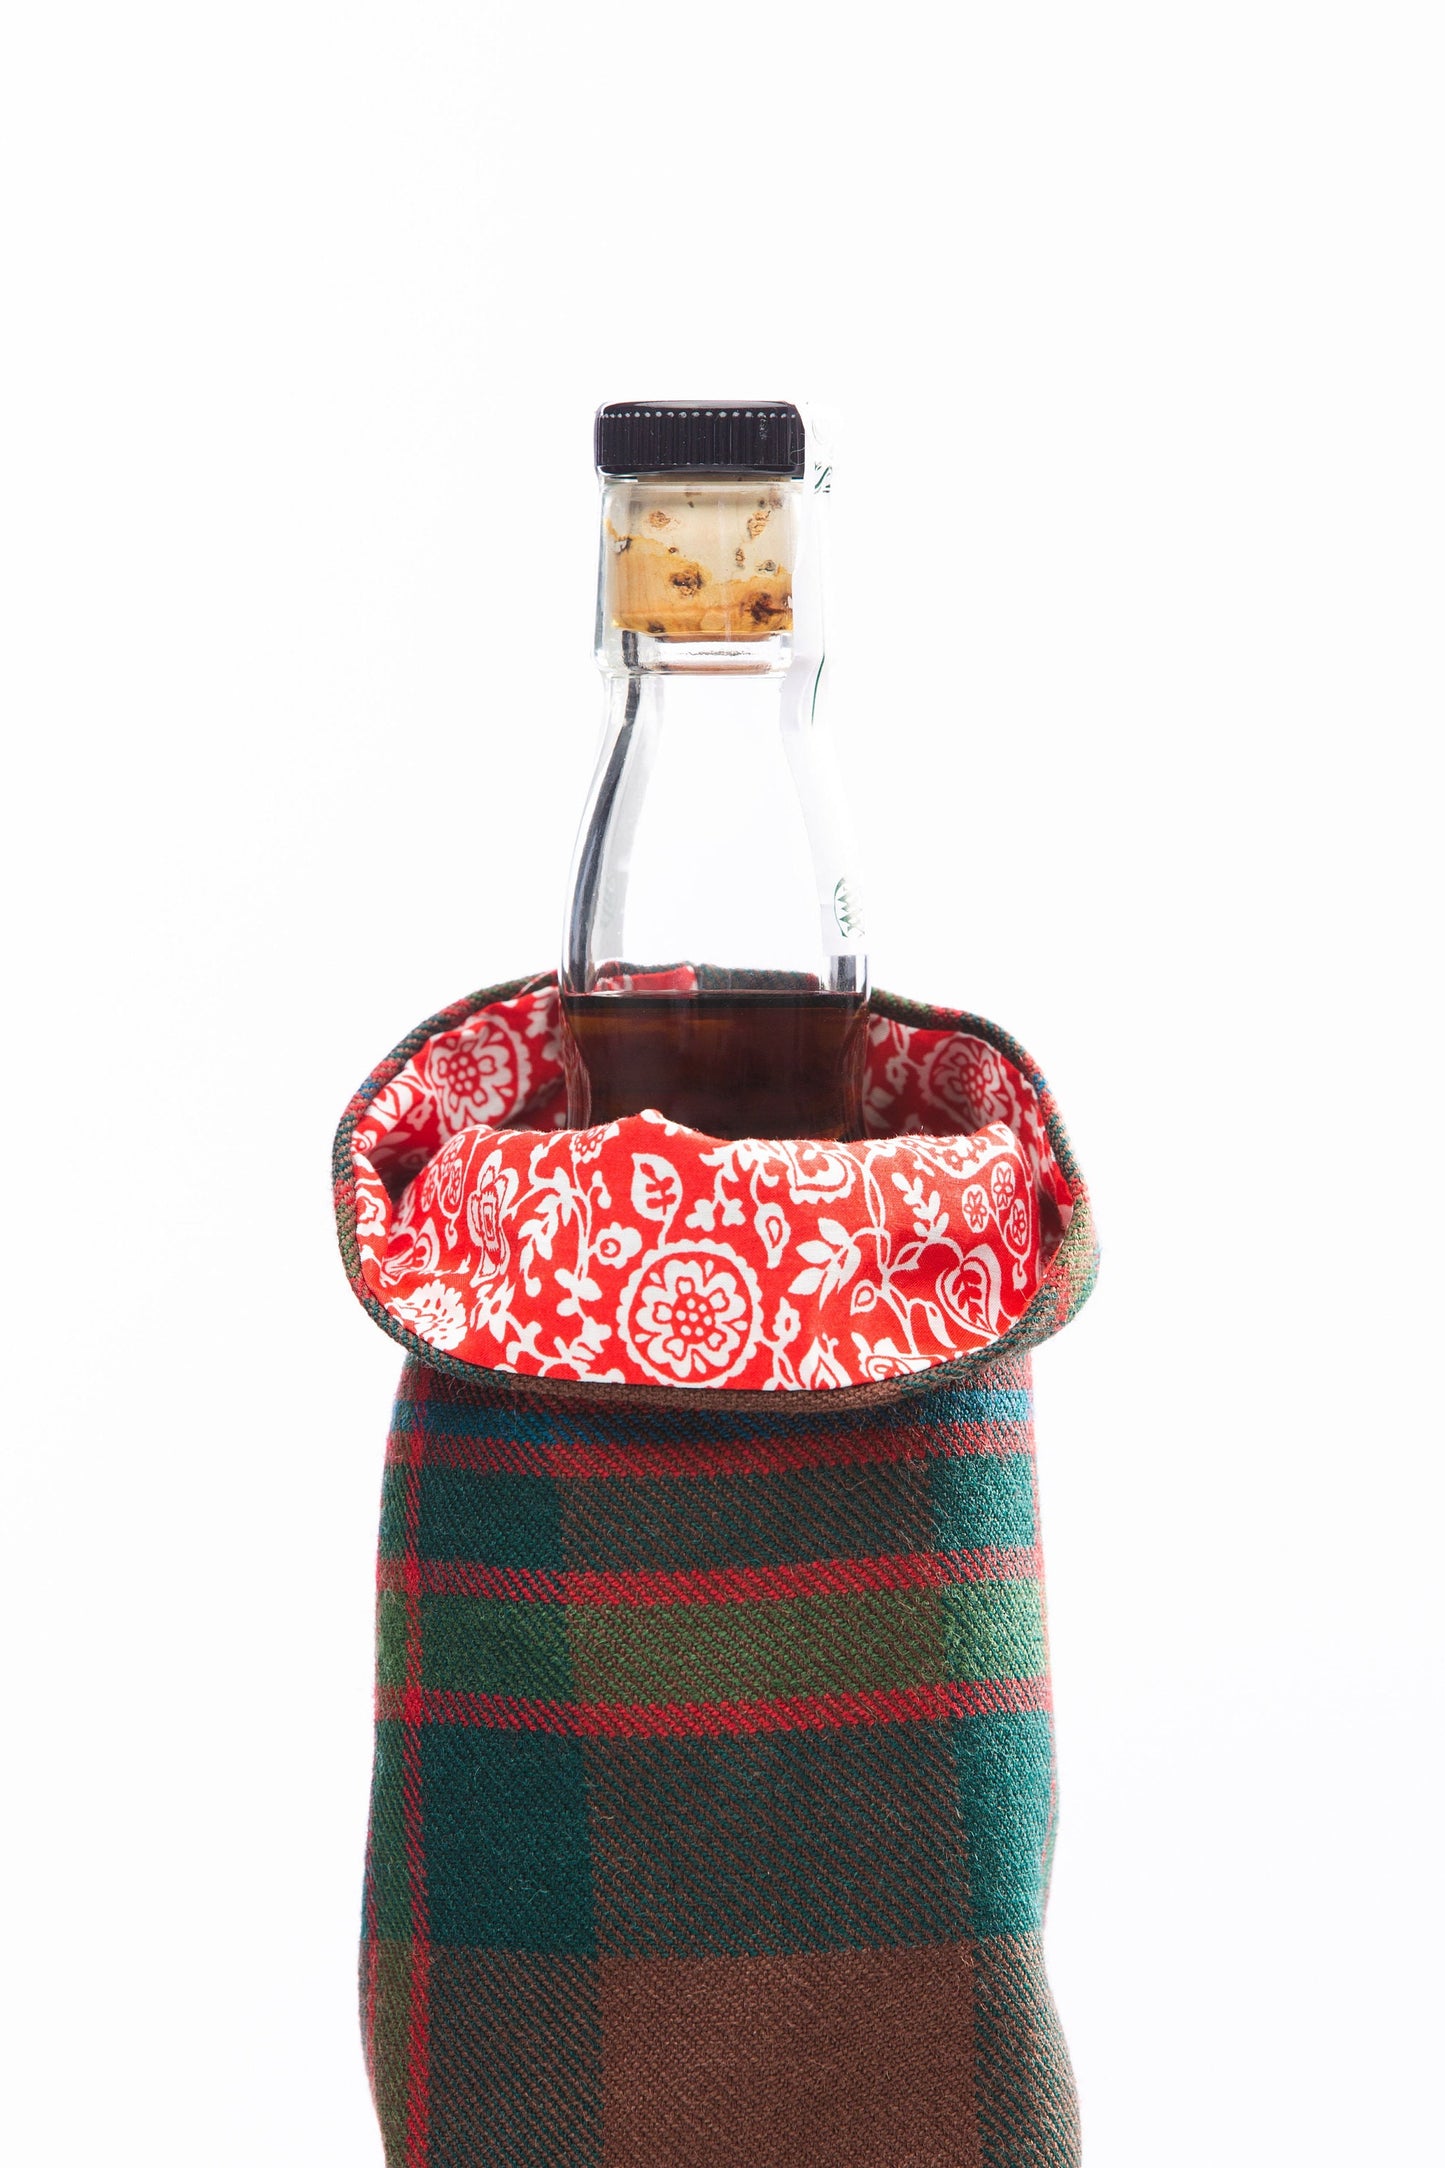 John Muir Way Tartan Luxury Scottish Bottle Bag made with Liberty Fabric Lining